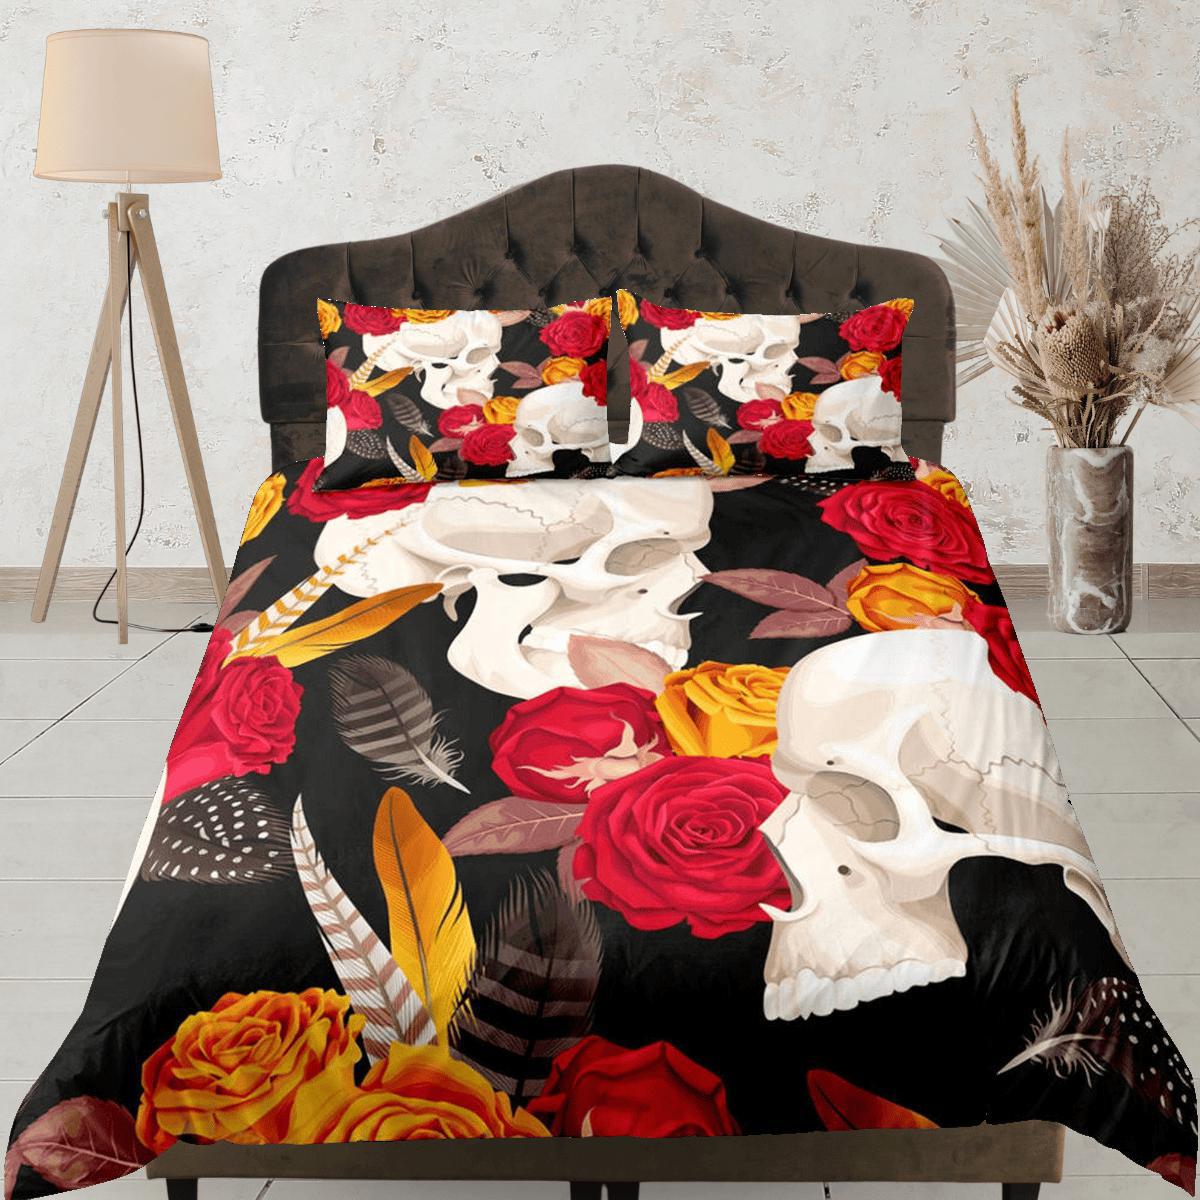 daintyduvet Skull and Roses Black Duvet Cover Set Gothic Bedspread Dorm Bedding with Pillowcase, Comforter Cover